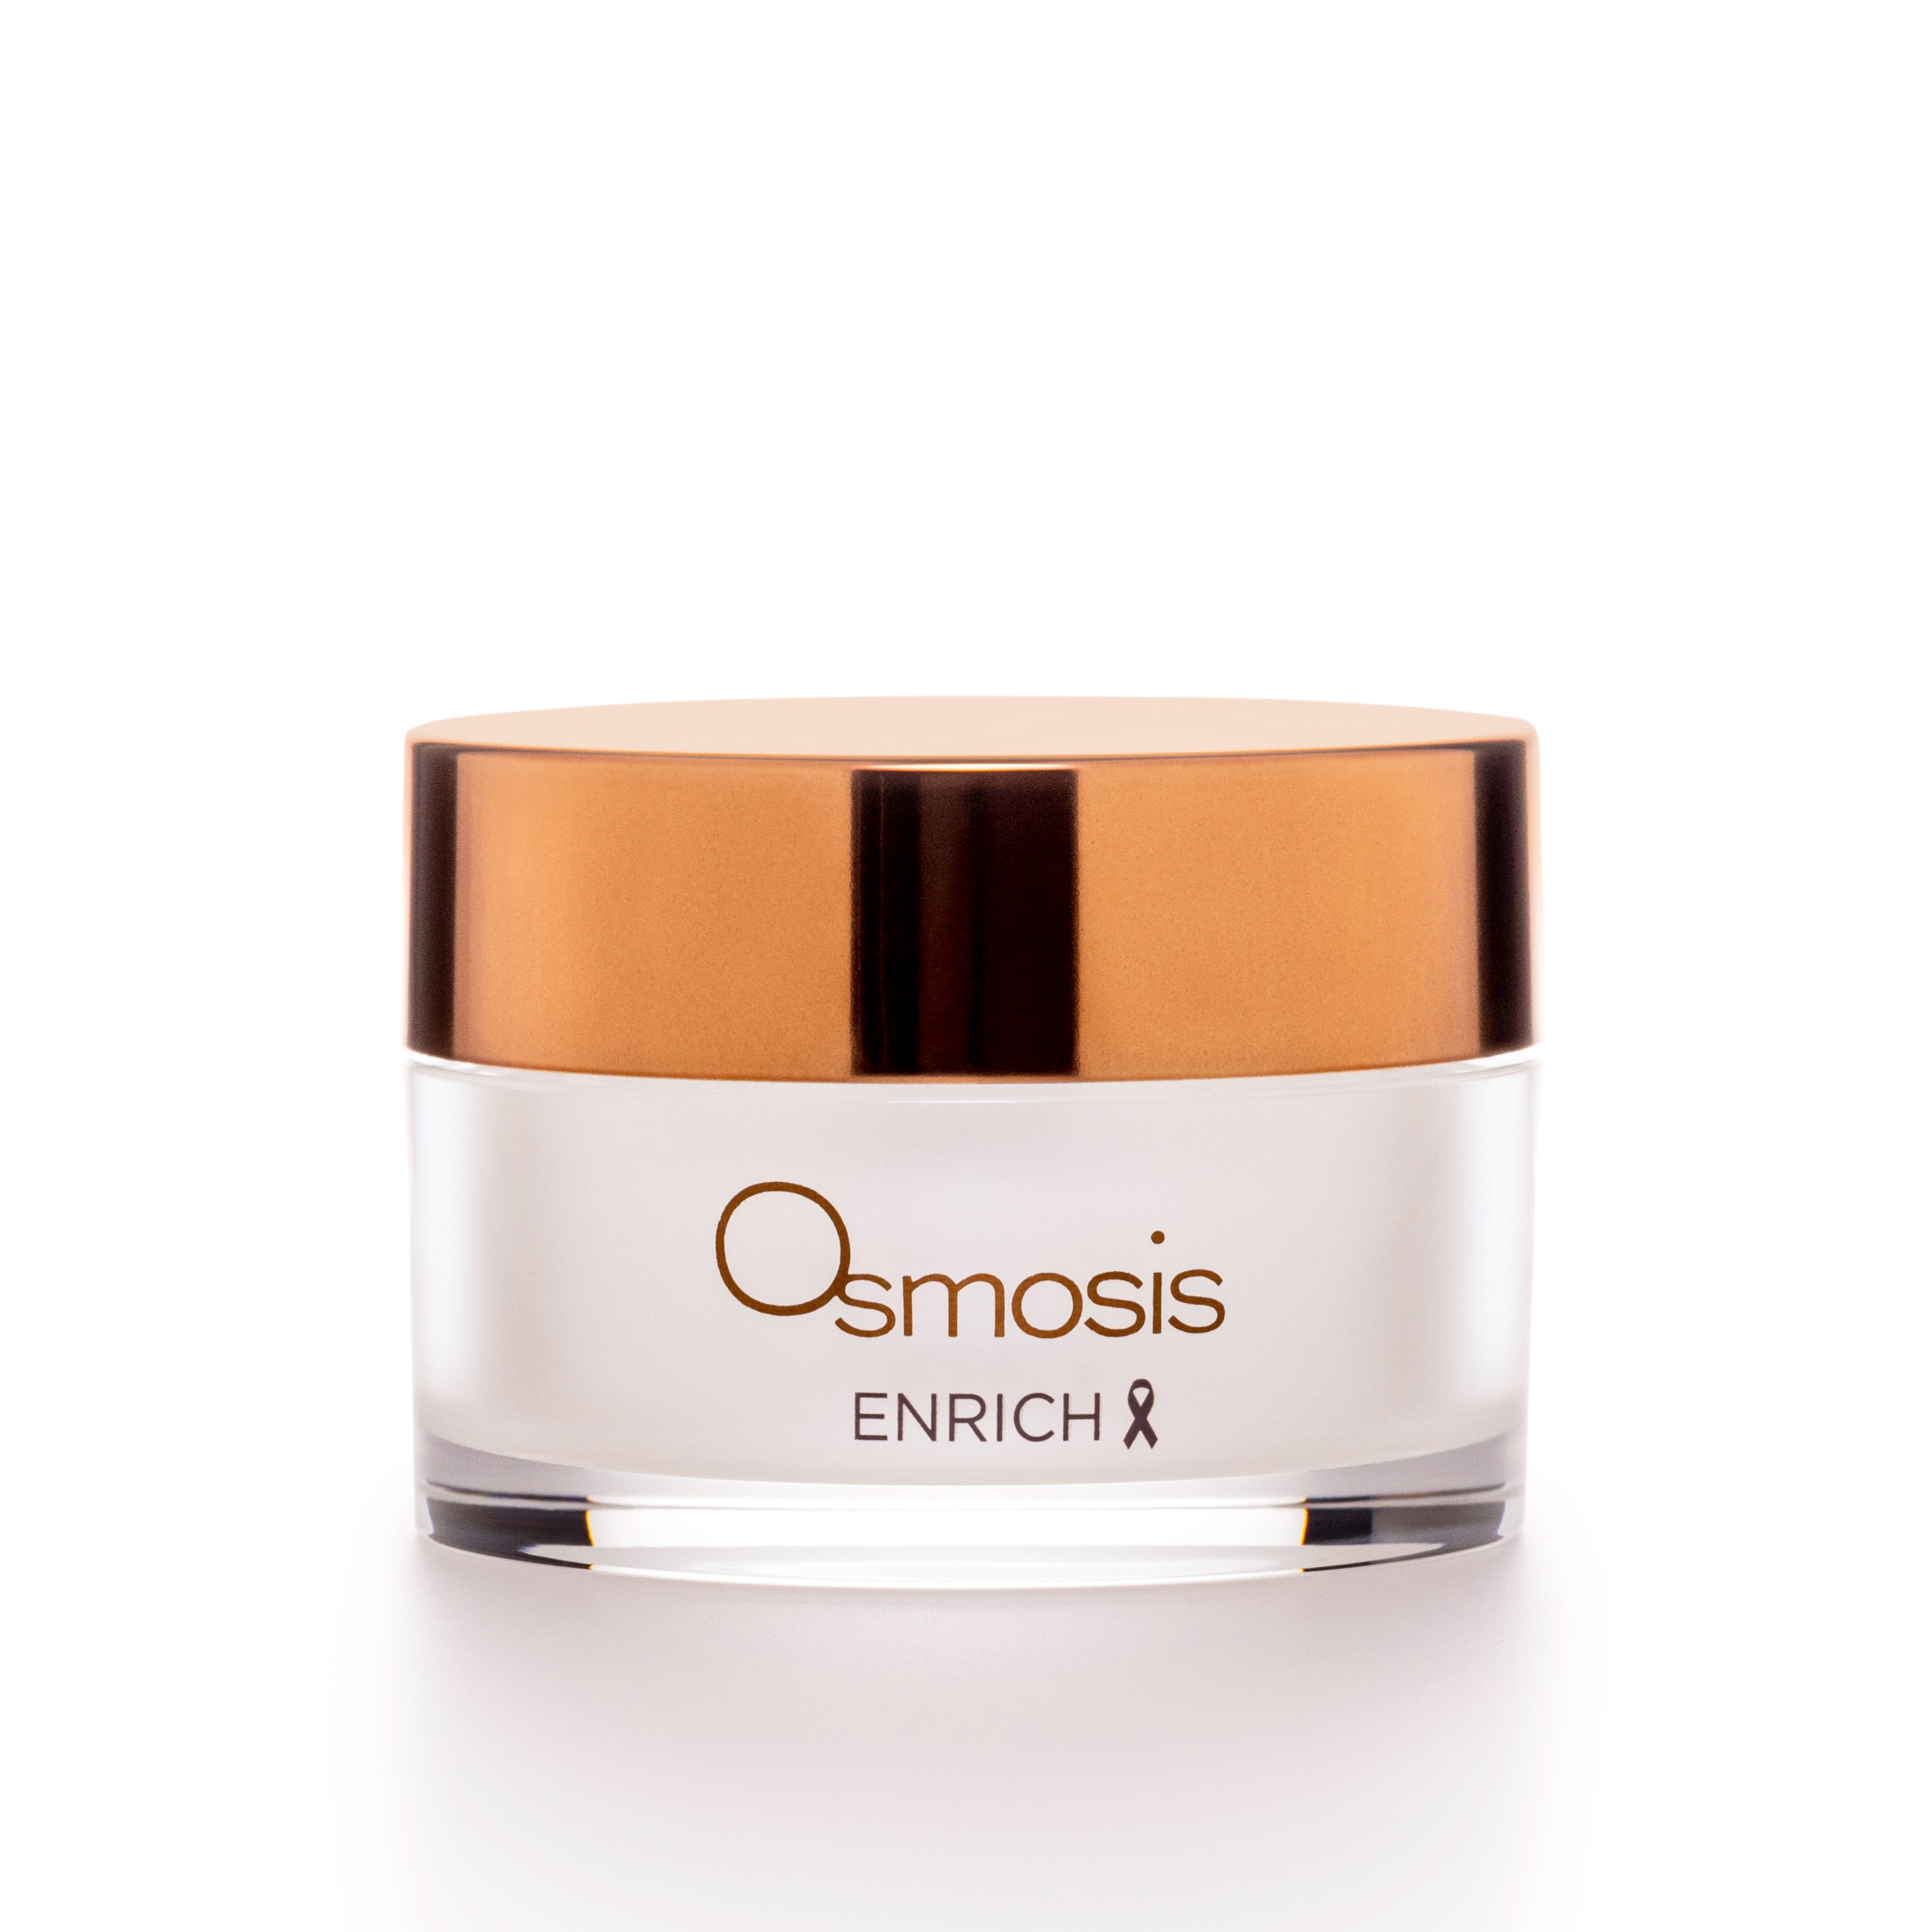 Enrich Restorative Face & Neck Cream